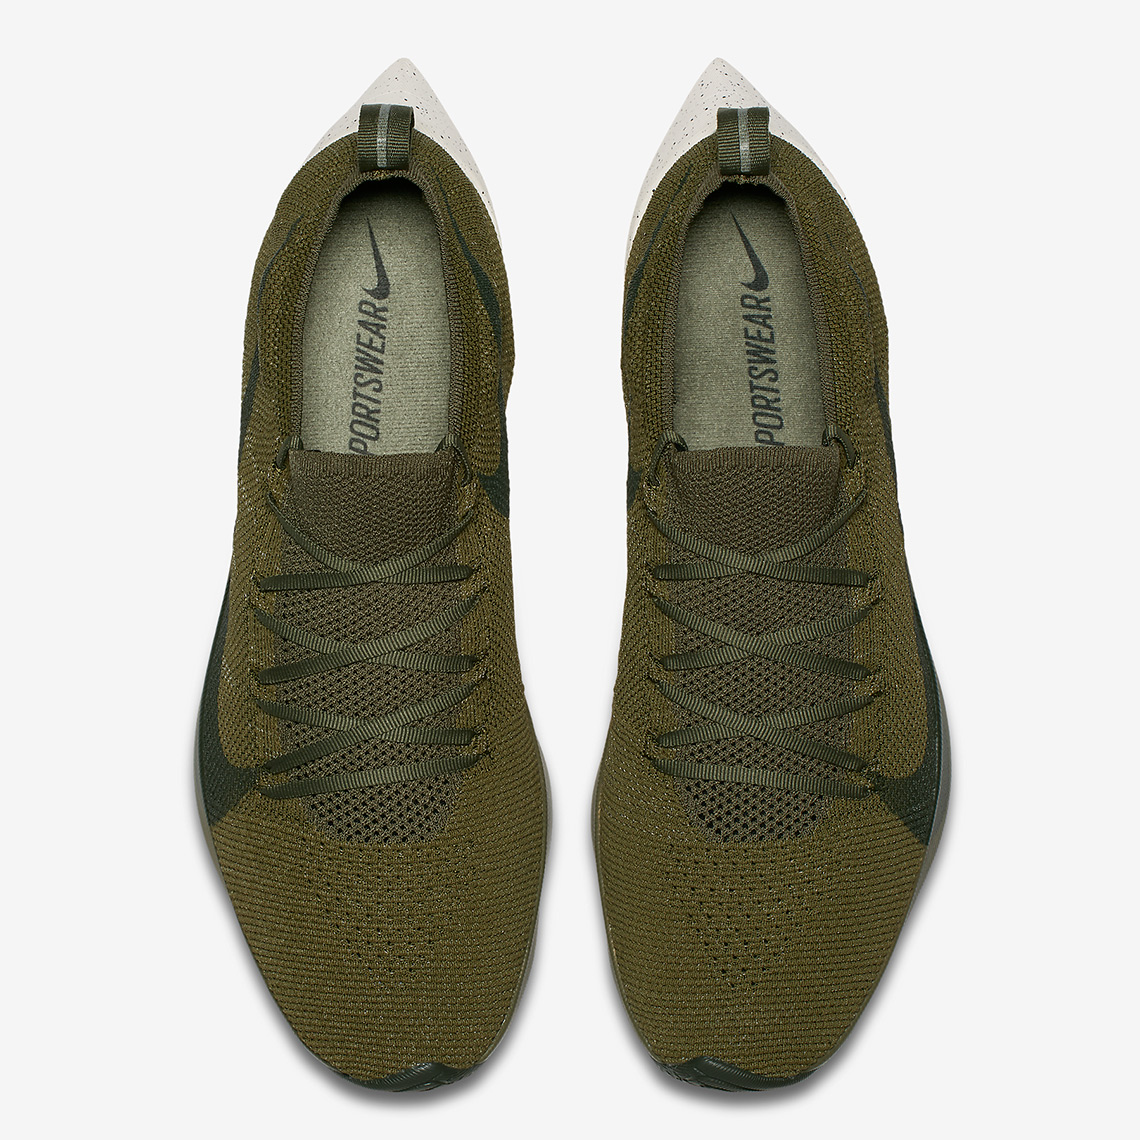 Nike Vapor Street Flyknit Colorways Coming Soon 5